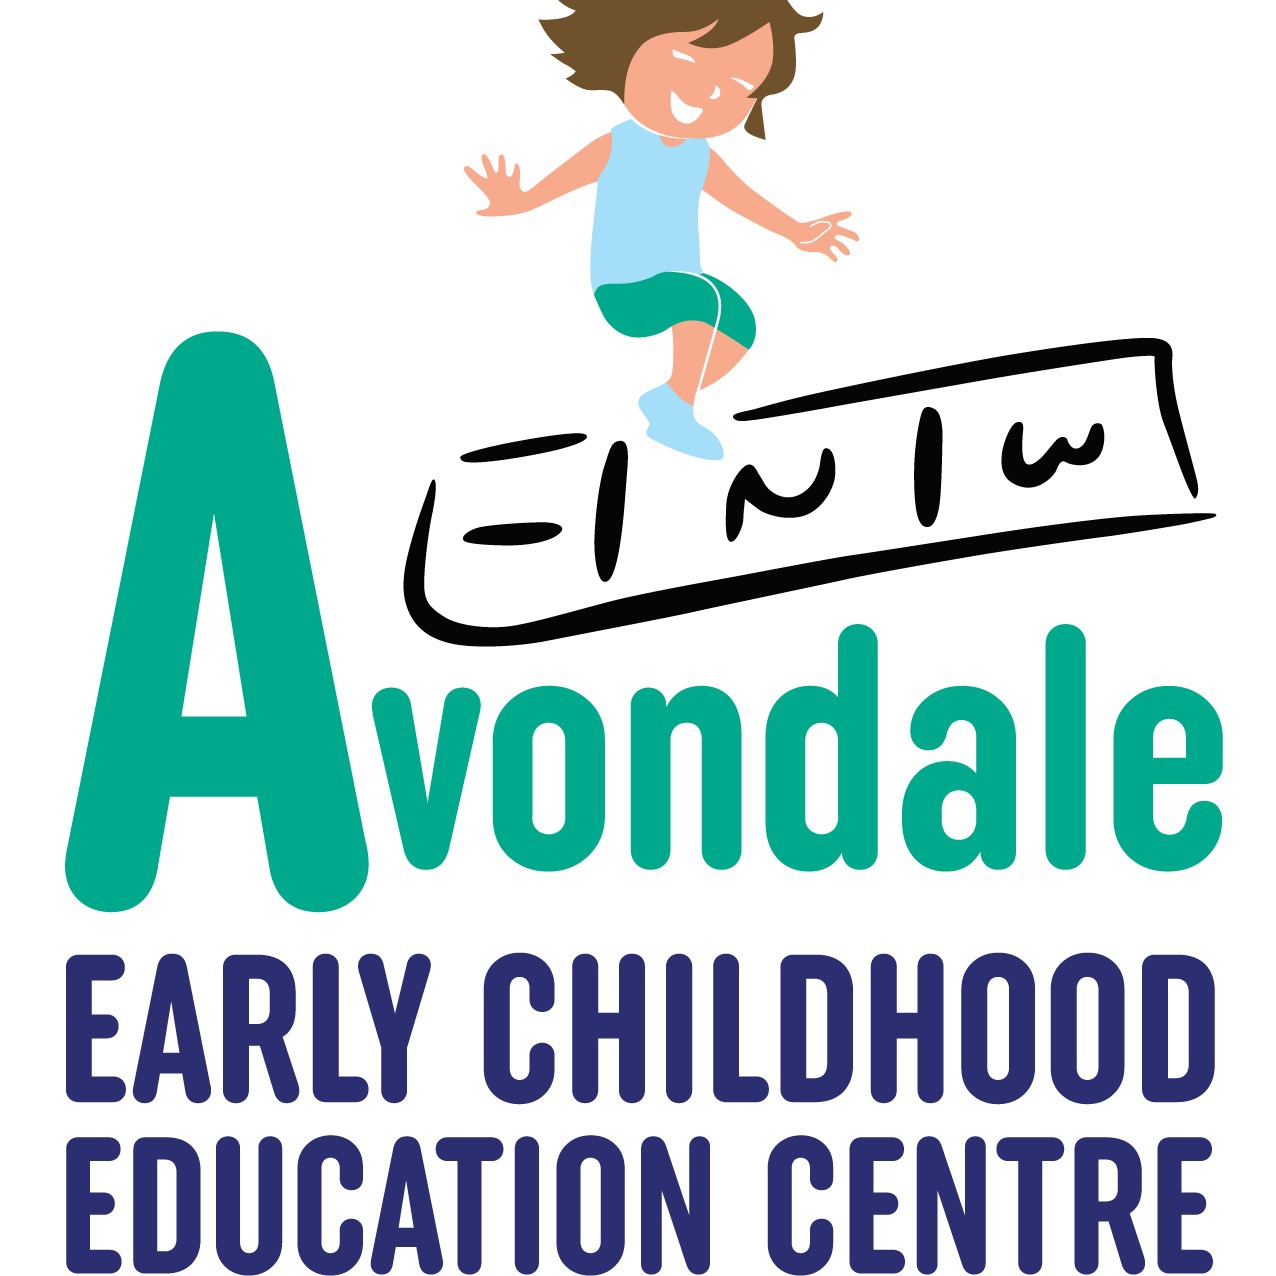 Avondale Early Childhood Education Centre